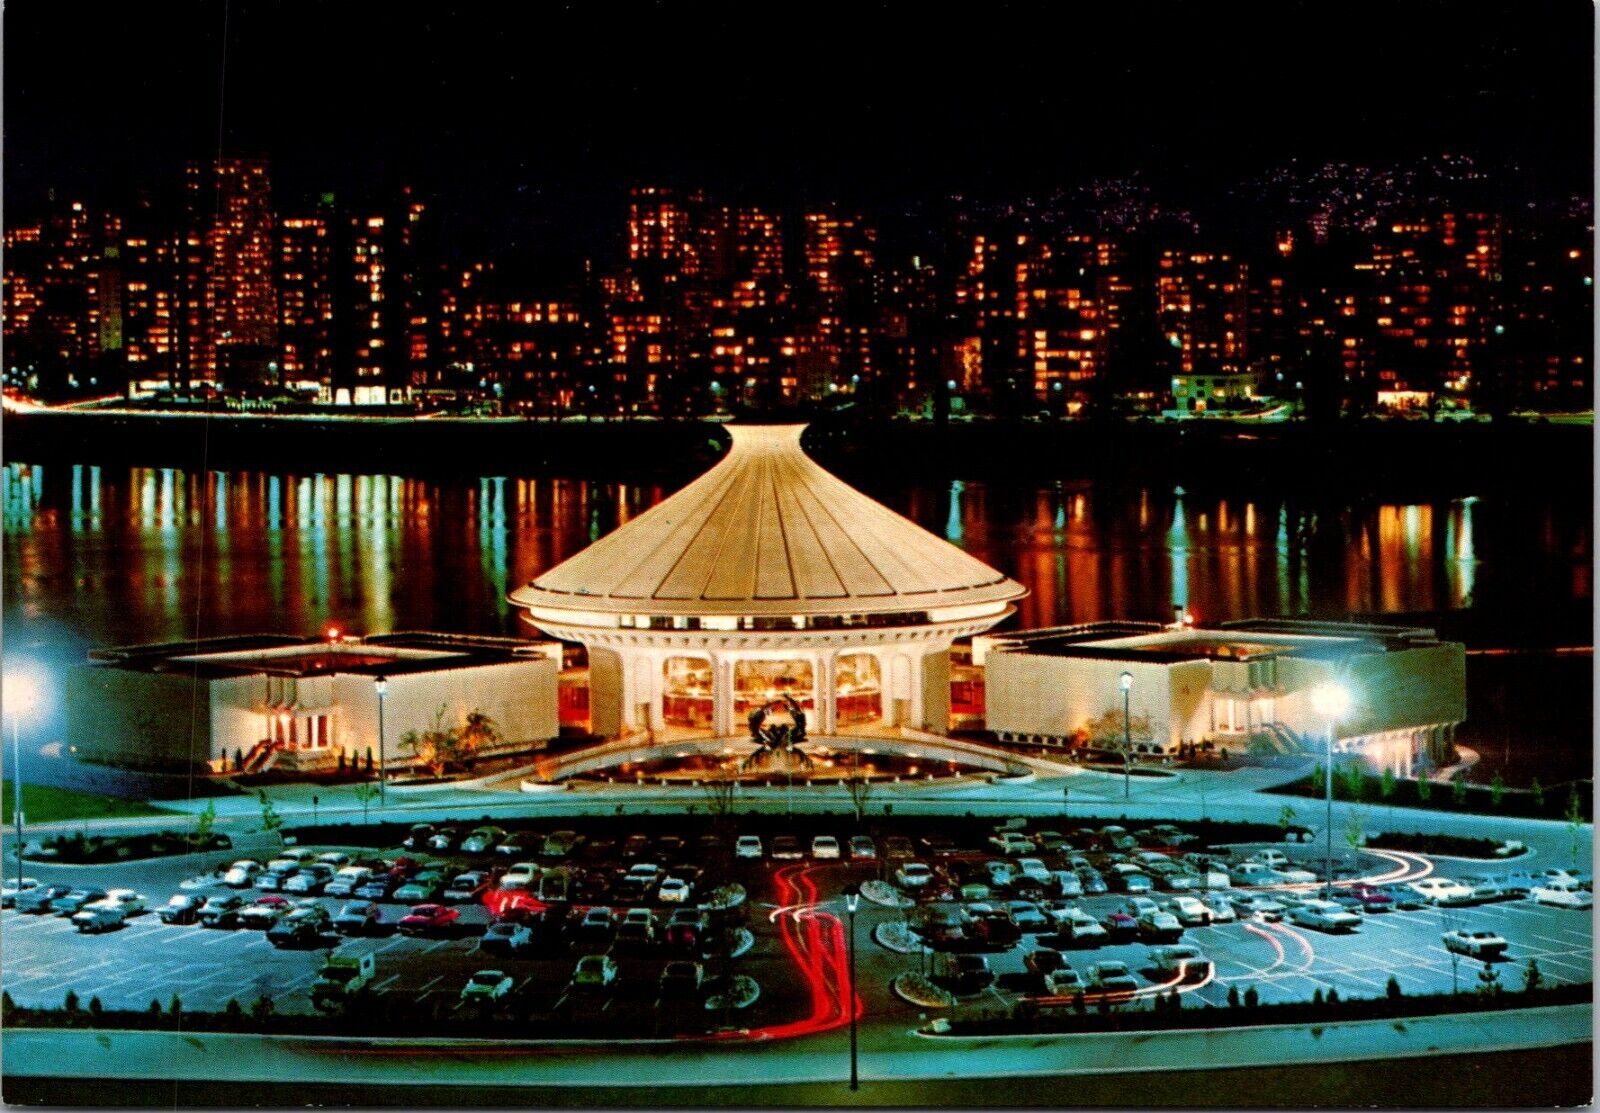 Vancouver, British Columbia Canada H. R. MacMillan Planetarium at Night Postcard